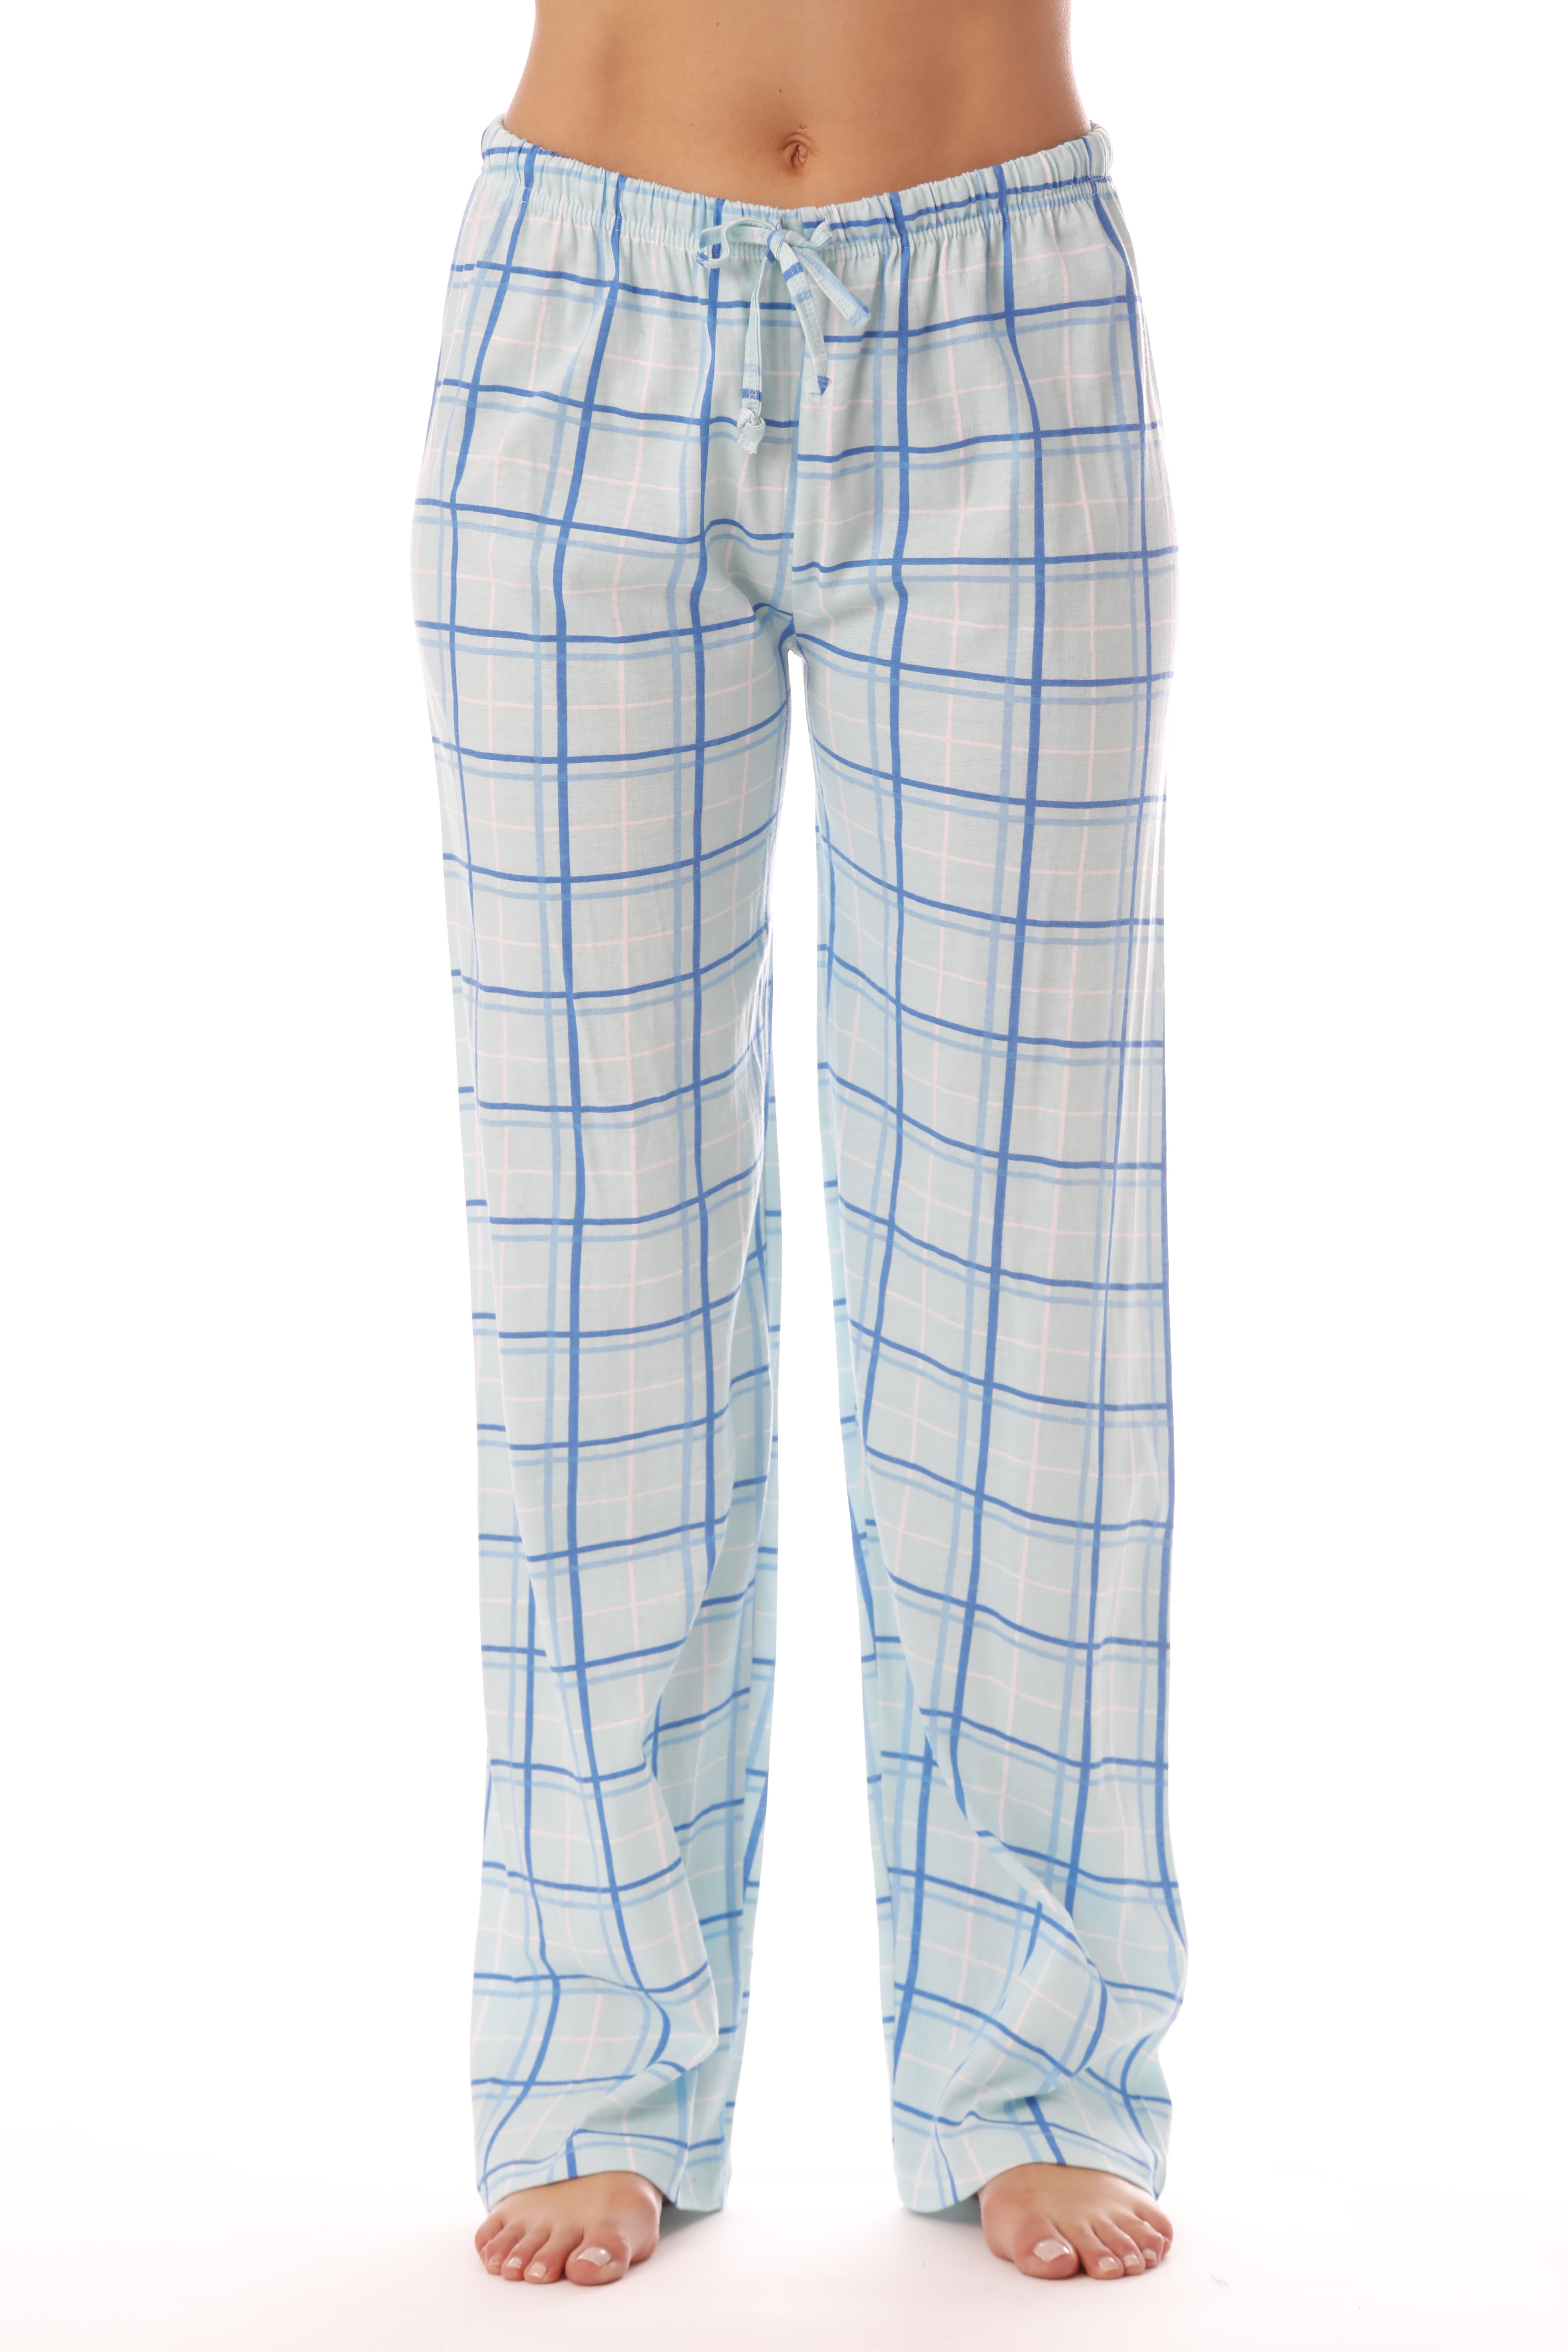 Surname Achieve Opinion blue plaid pyjama pants Adolescent Lil Simplify